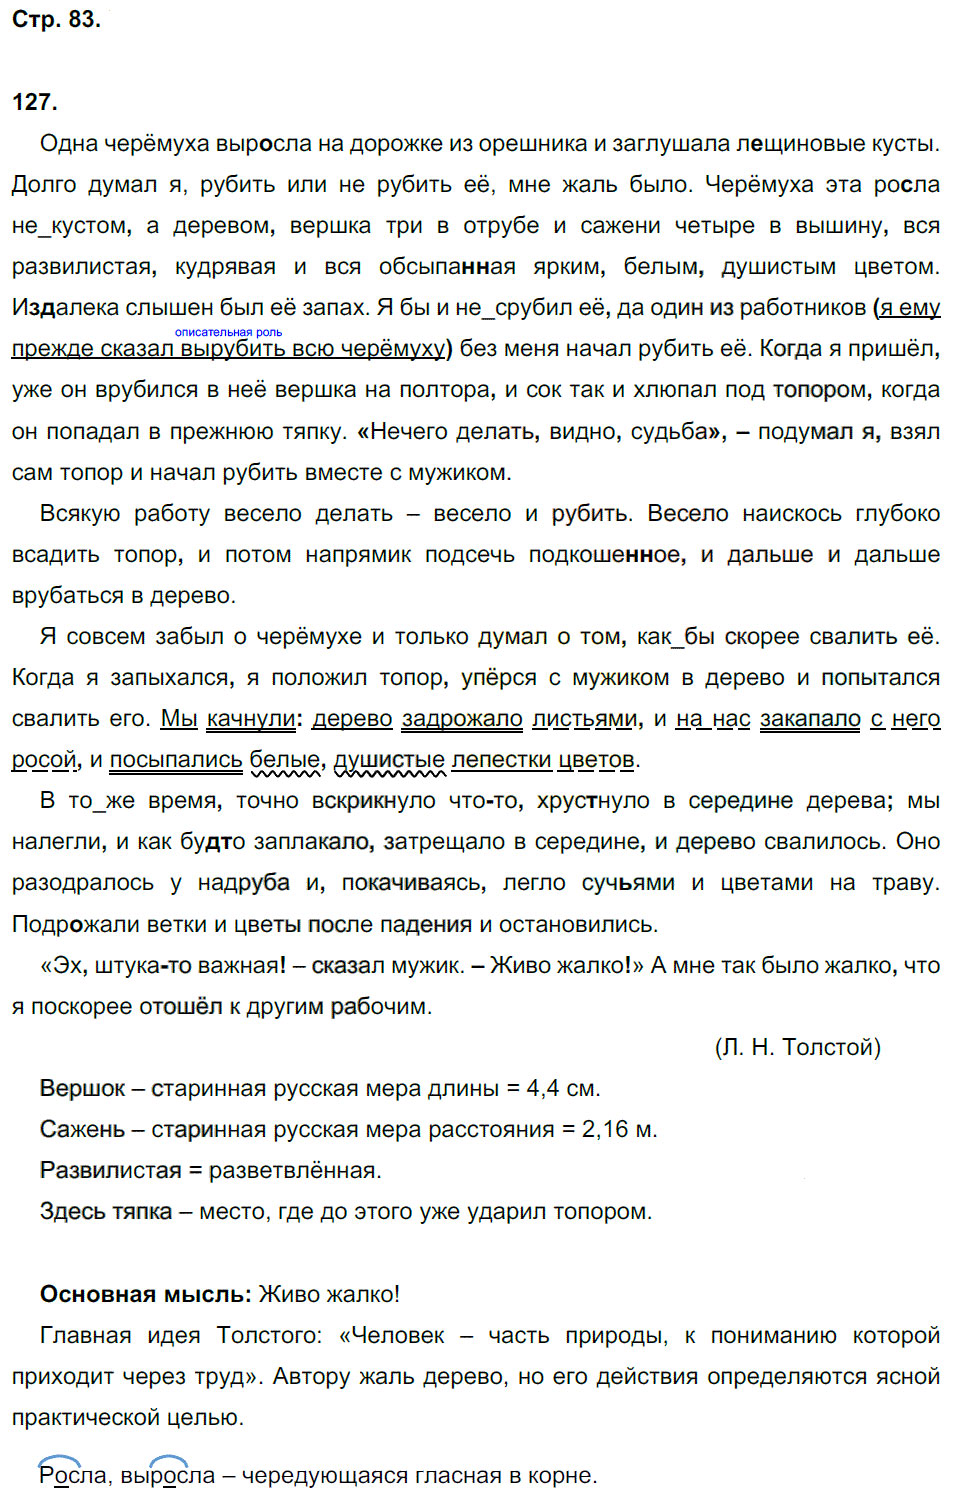 гдз 8 класс рабочая тетрадь страница 83 русский язык Кулаева